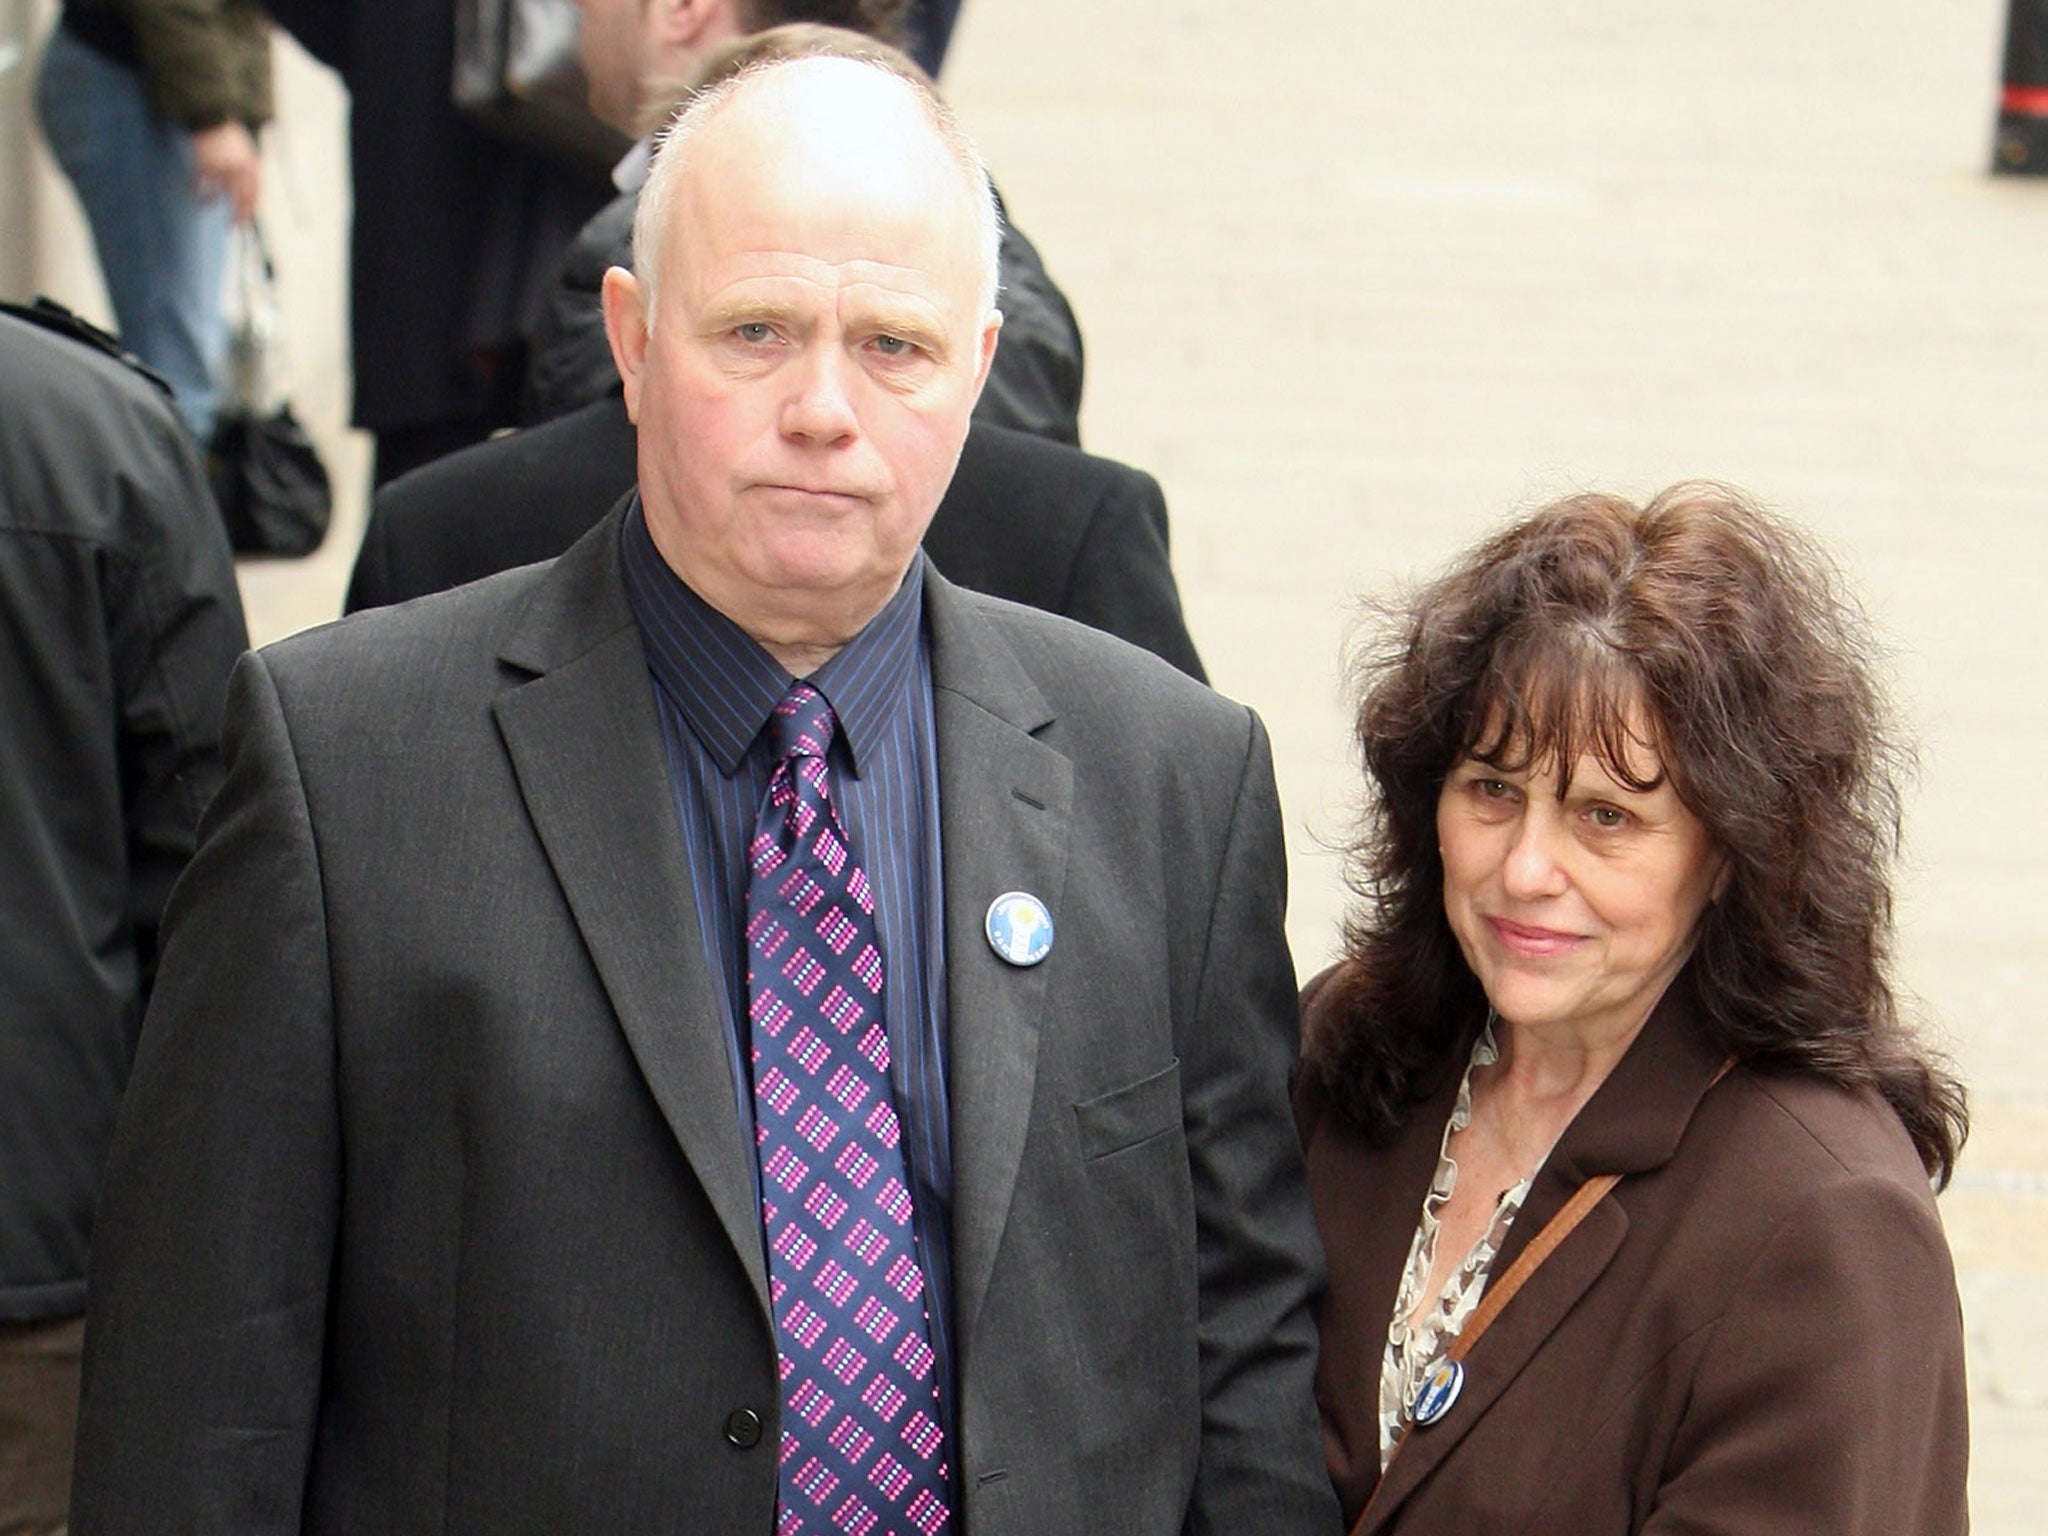 Barry and Margaret Mizen, parents of murdered schoolboy Jimmy Mizen